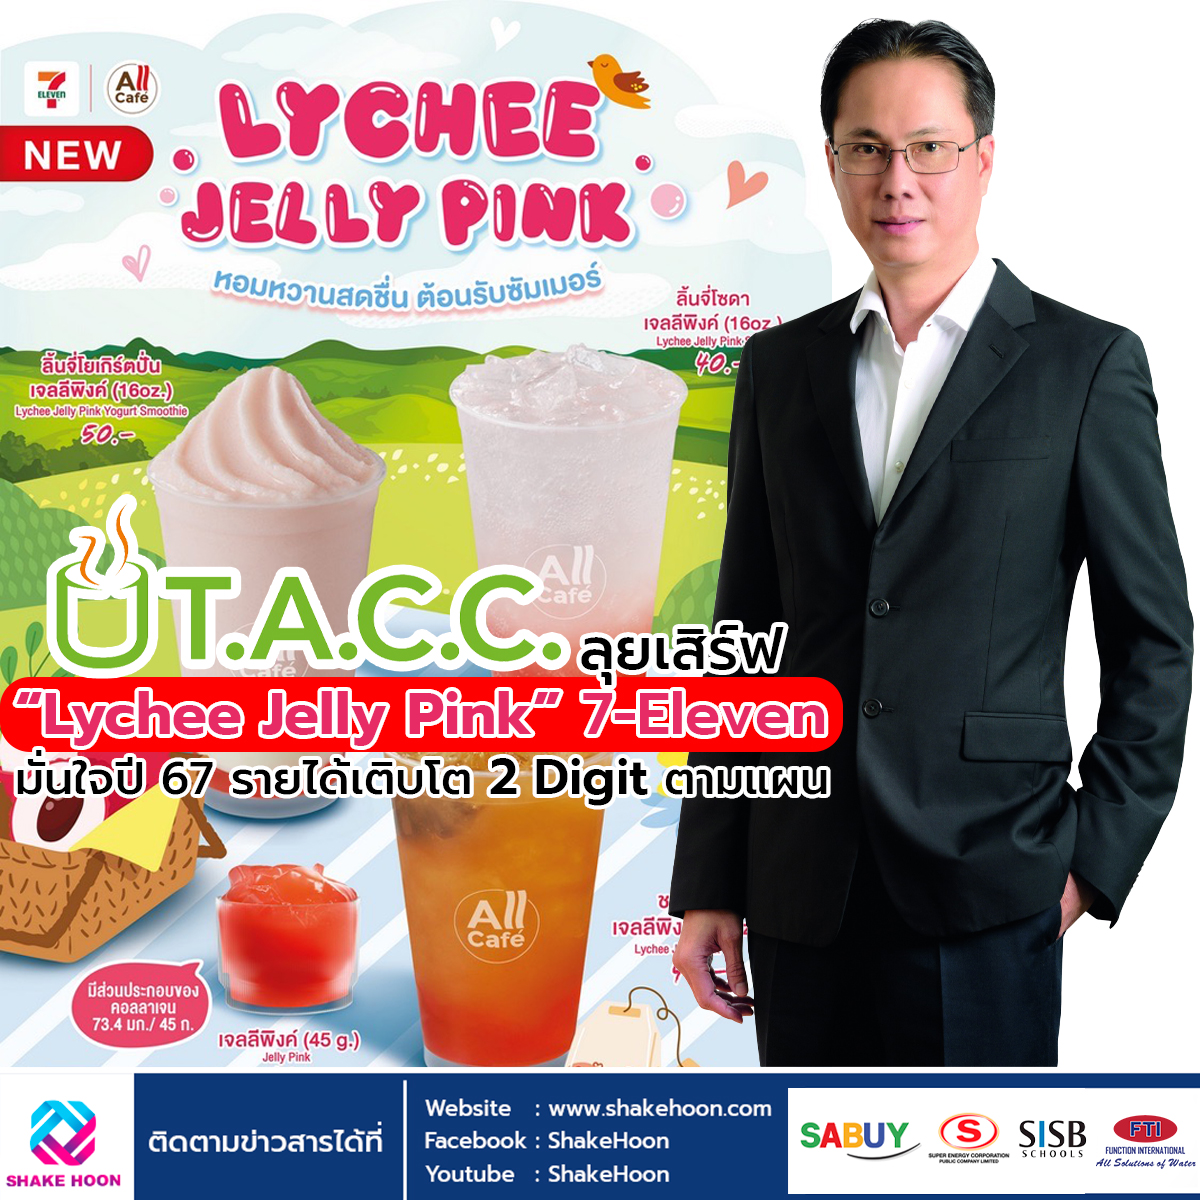 TACC ลุยเสิร์ฟ “Lychee Jelly Pink” 7-Eleven มั่นใจปี 67 รายได้เติบโต 2 Digit ตามแผน